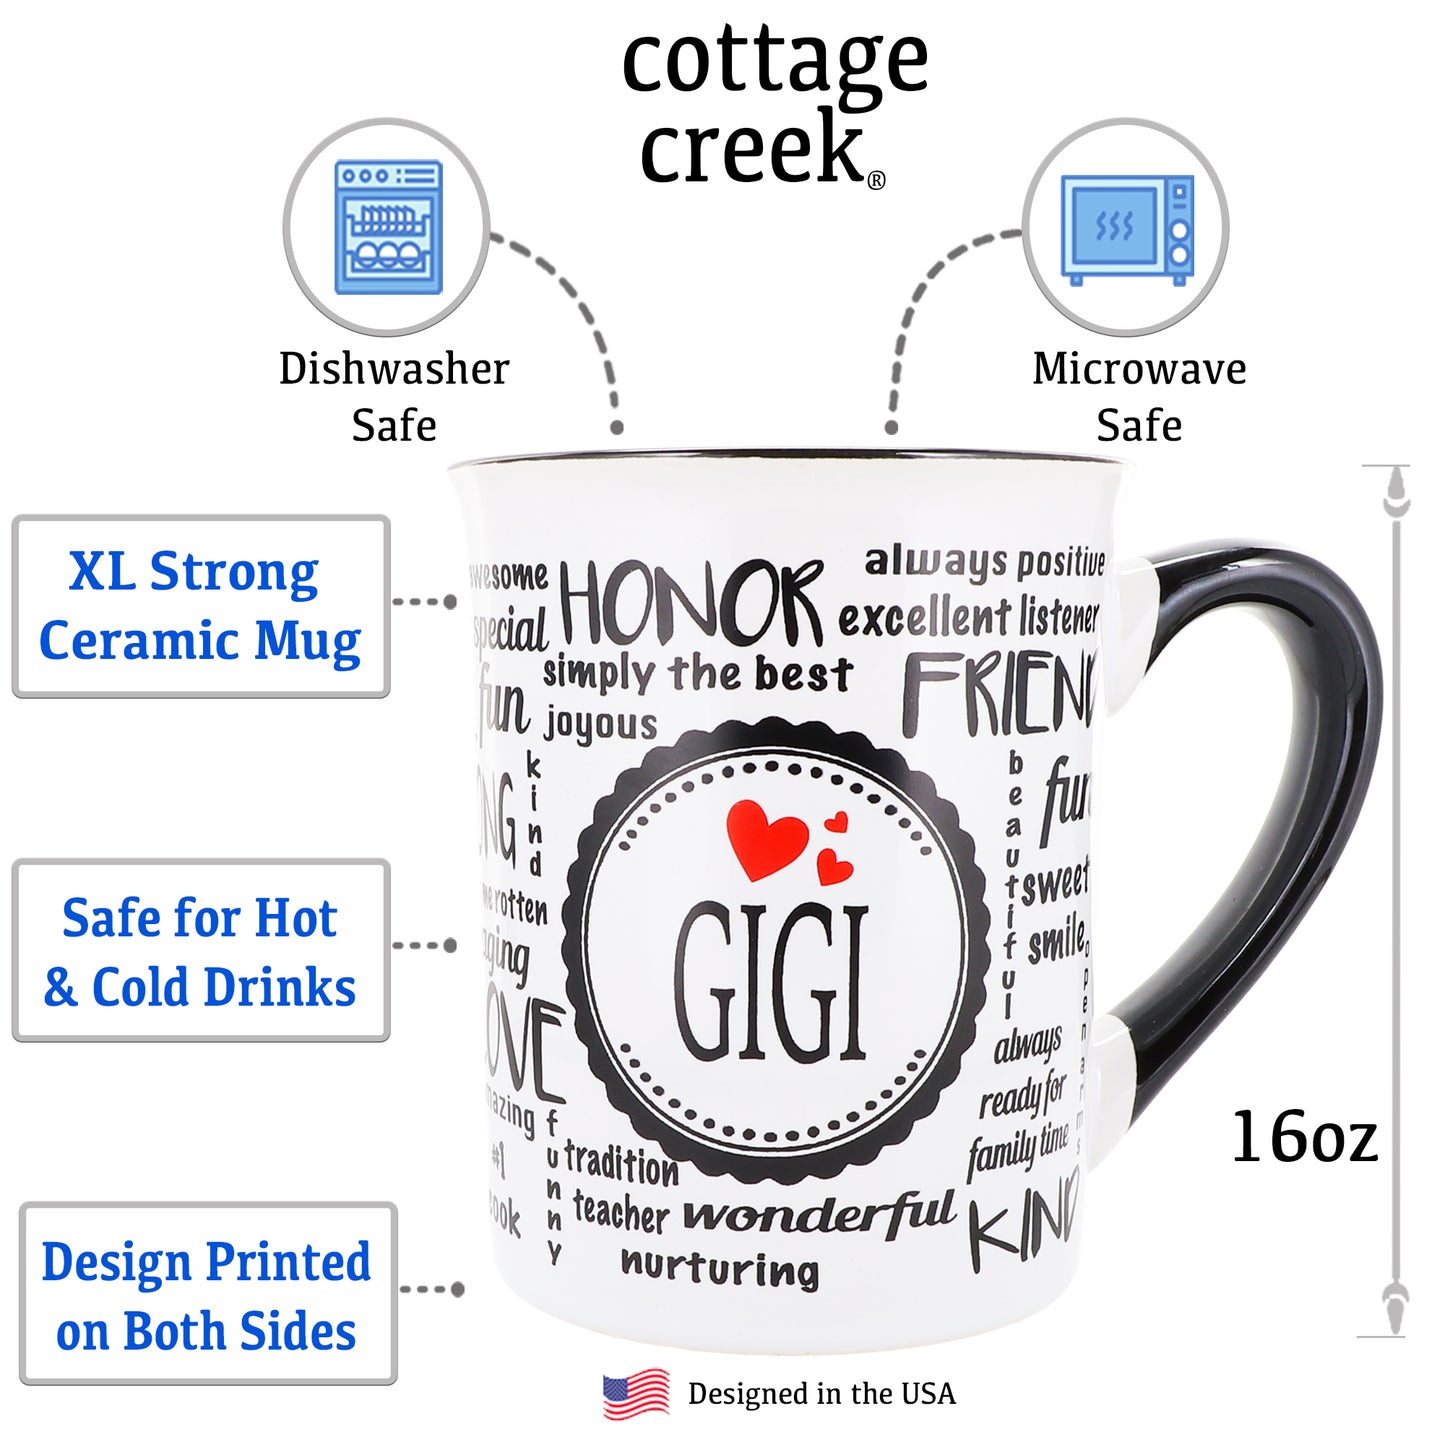 Cottage Creek Gigi Mug, Gigi Coffee Mug, Ceramic, 16oz., 6" Multicolored